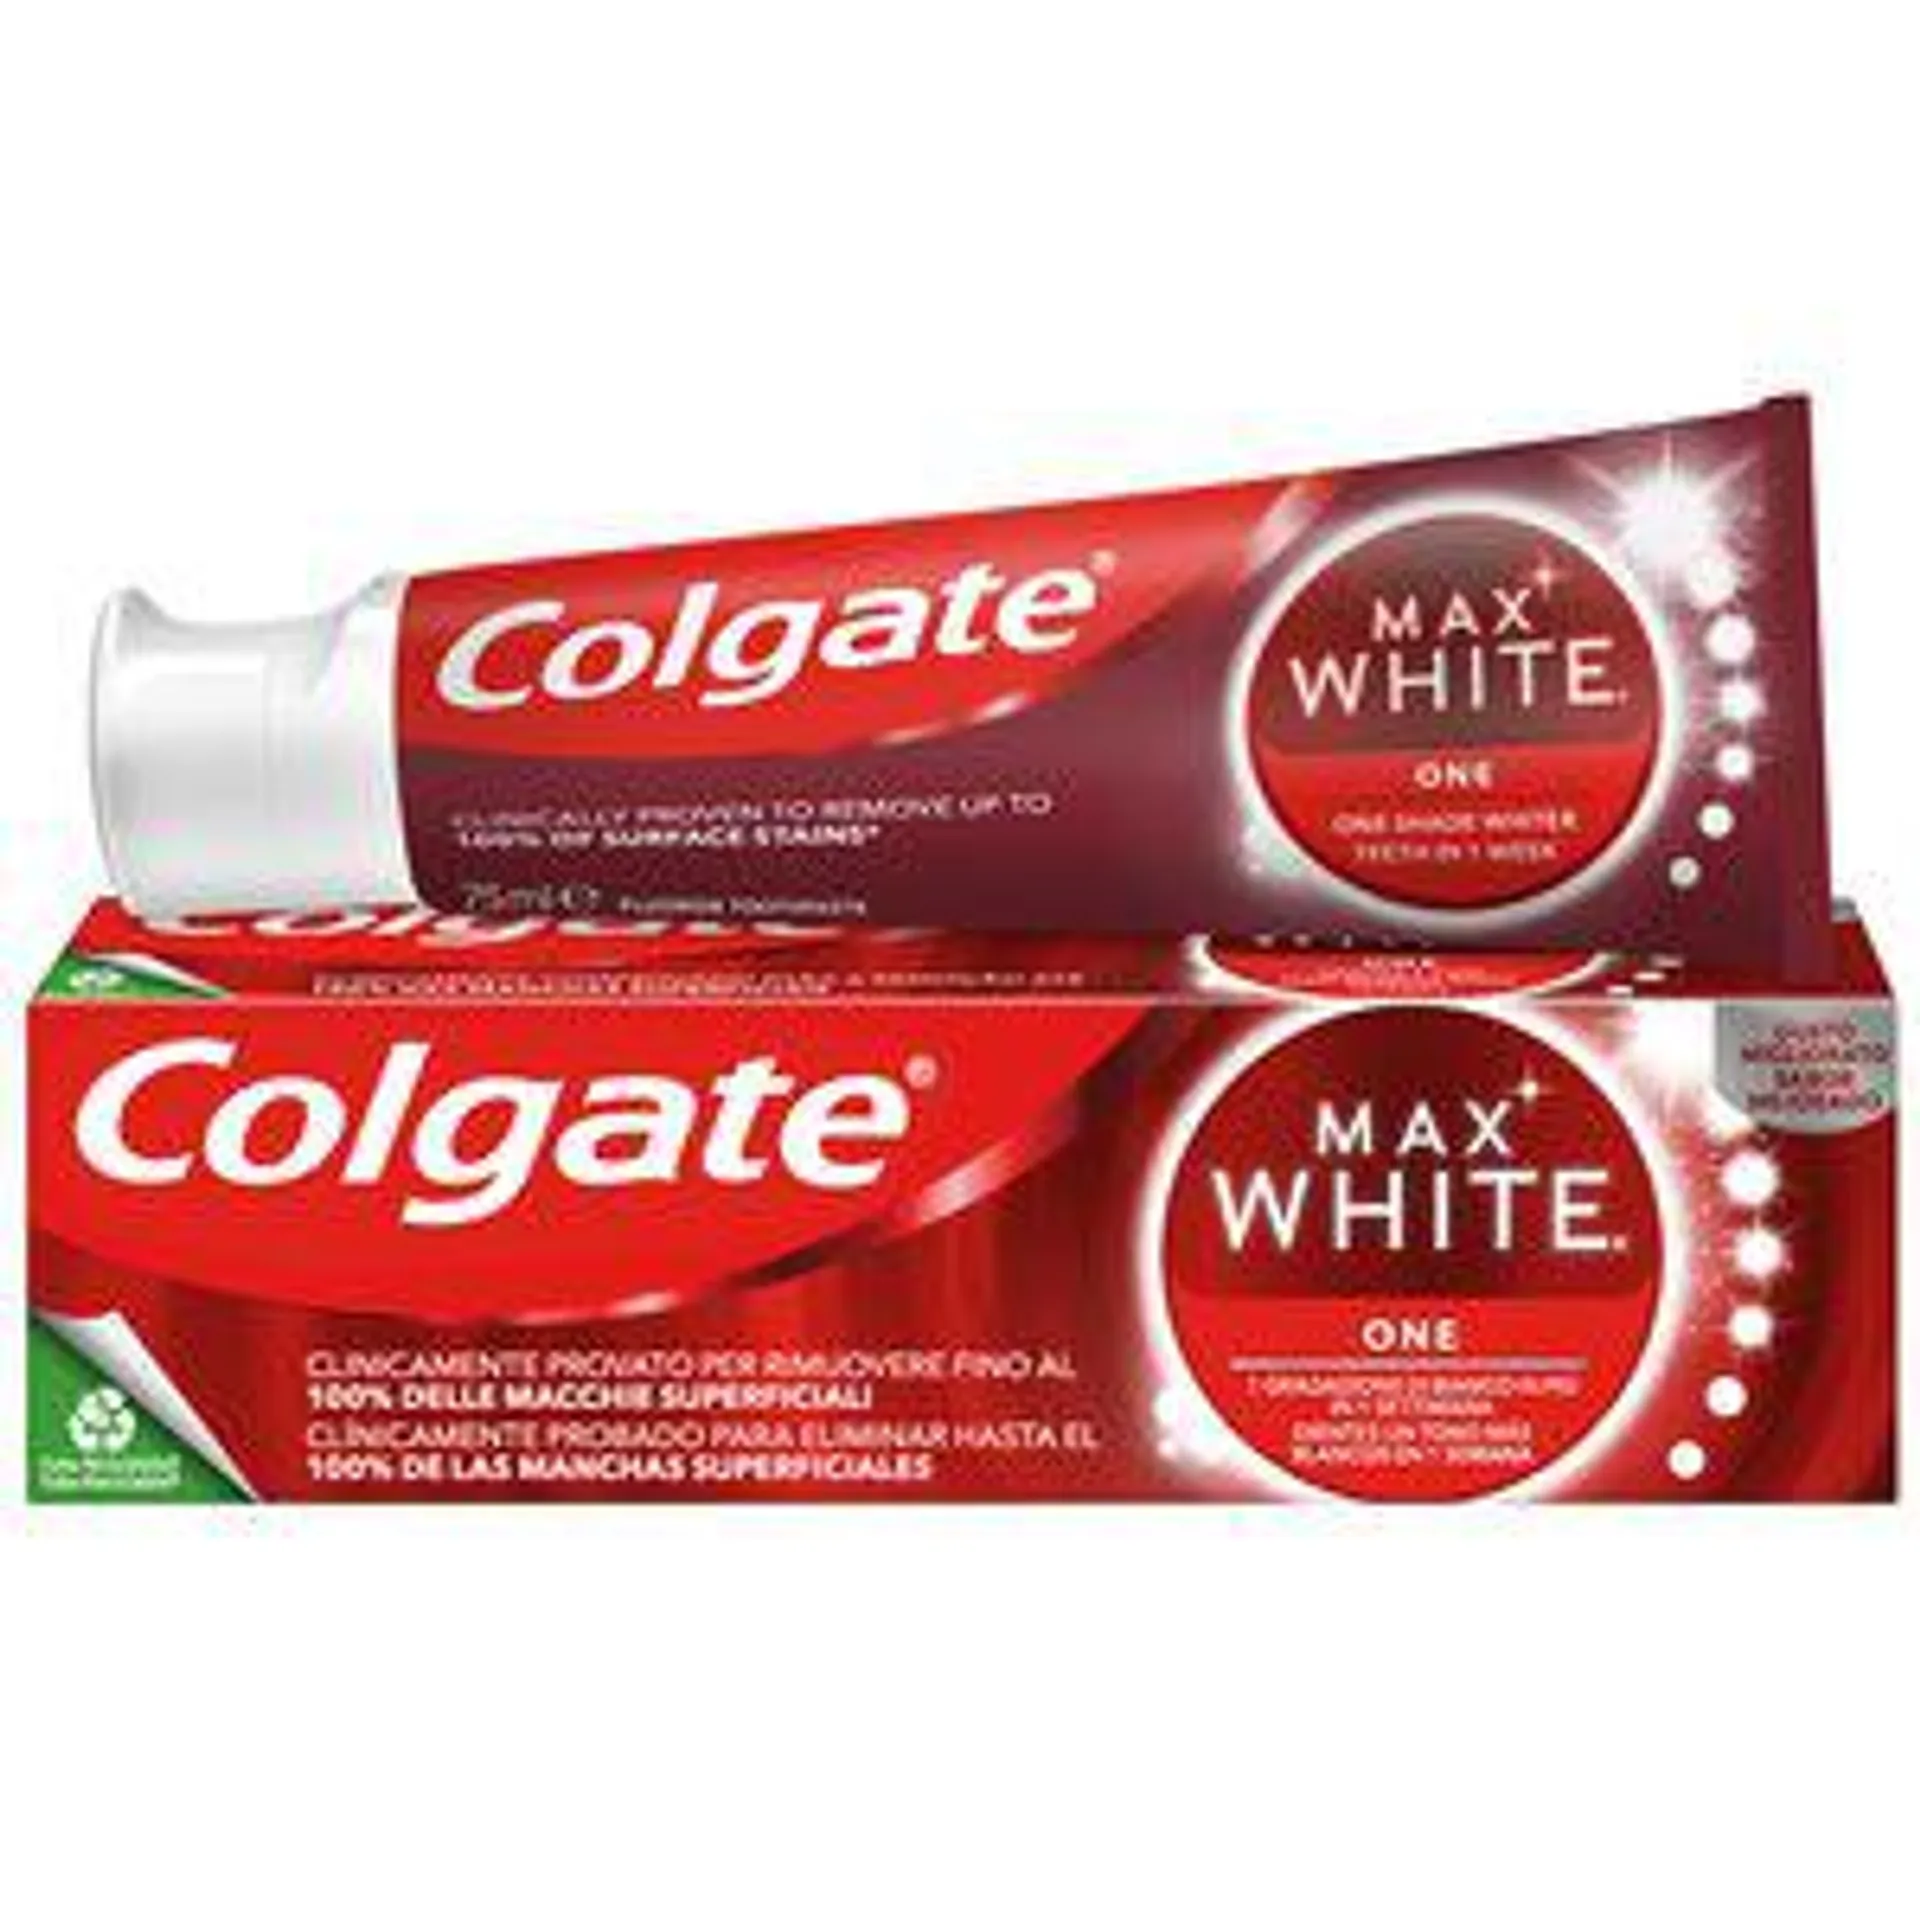 COLGATE pasta dentífrica max white one tubo 75 ml